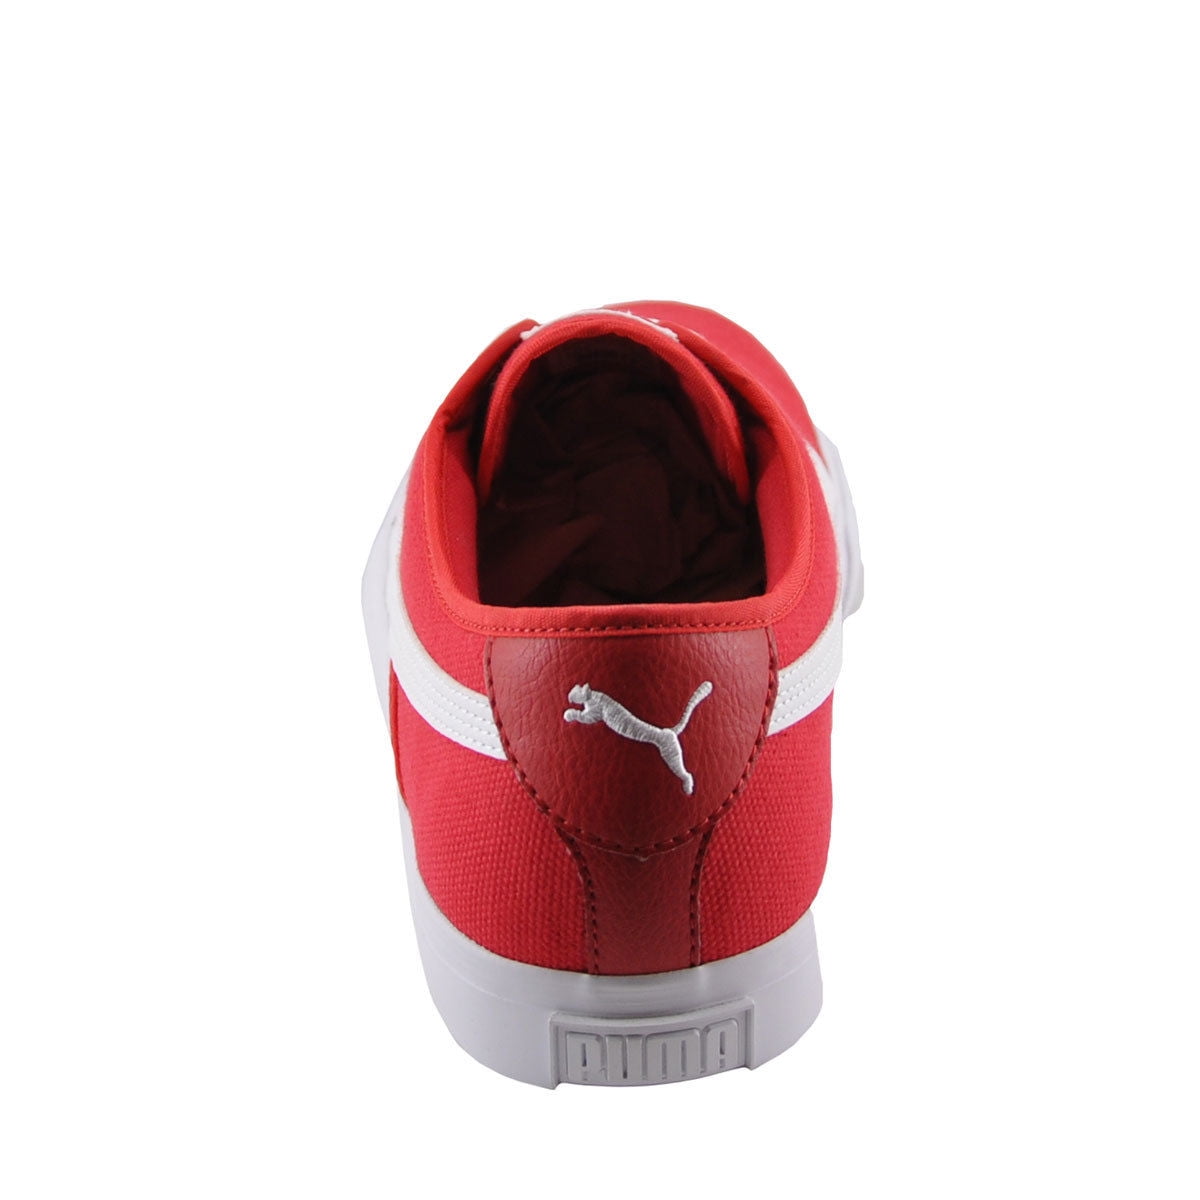 Puma Urban Protect Aerial: Composite Toe Sneaker Work Shoe